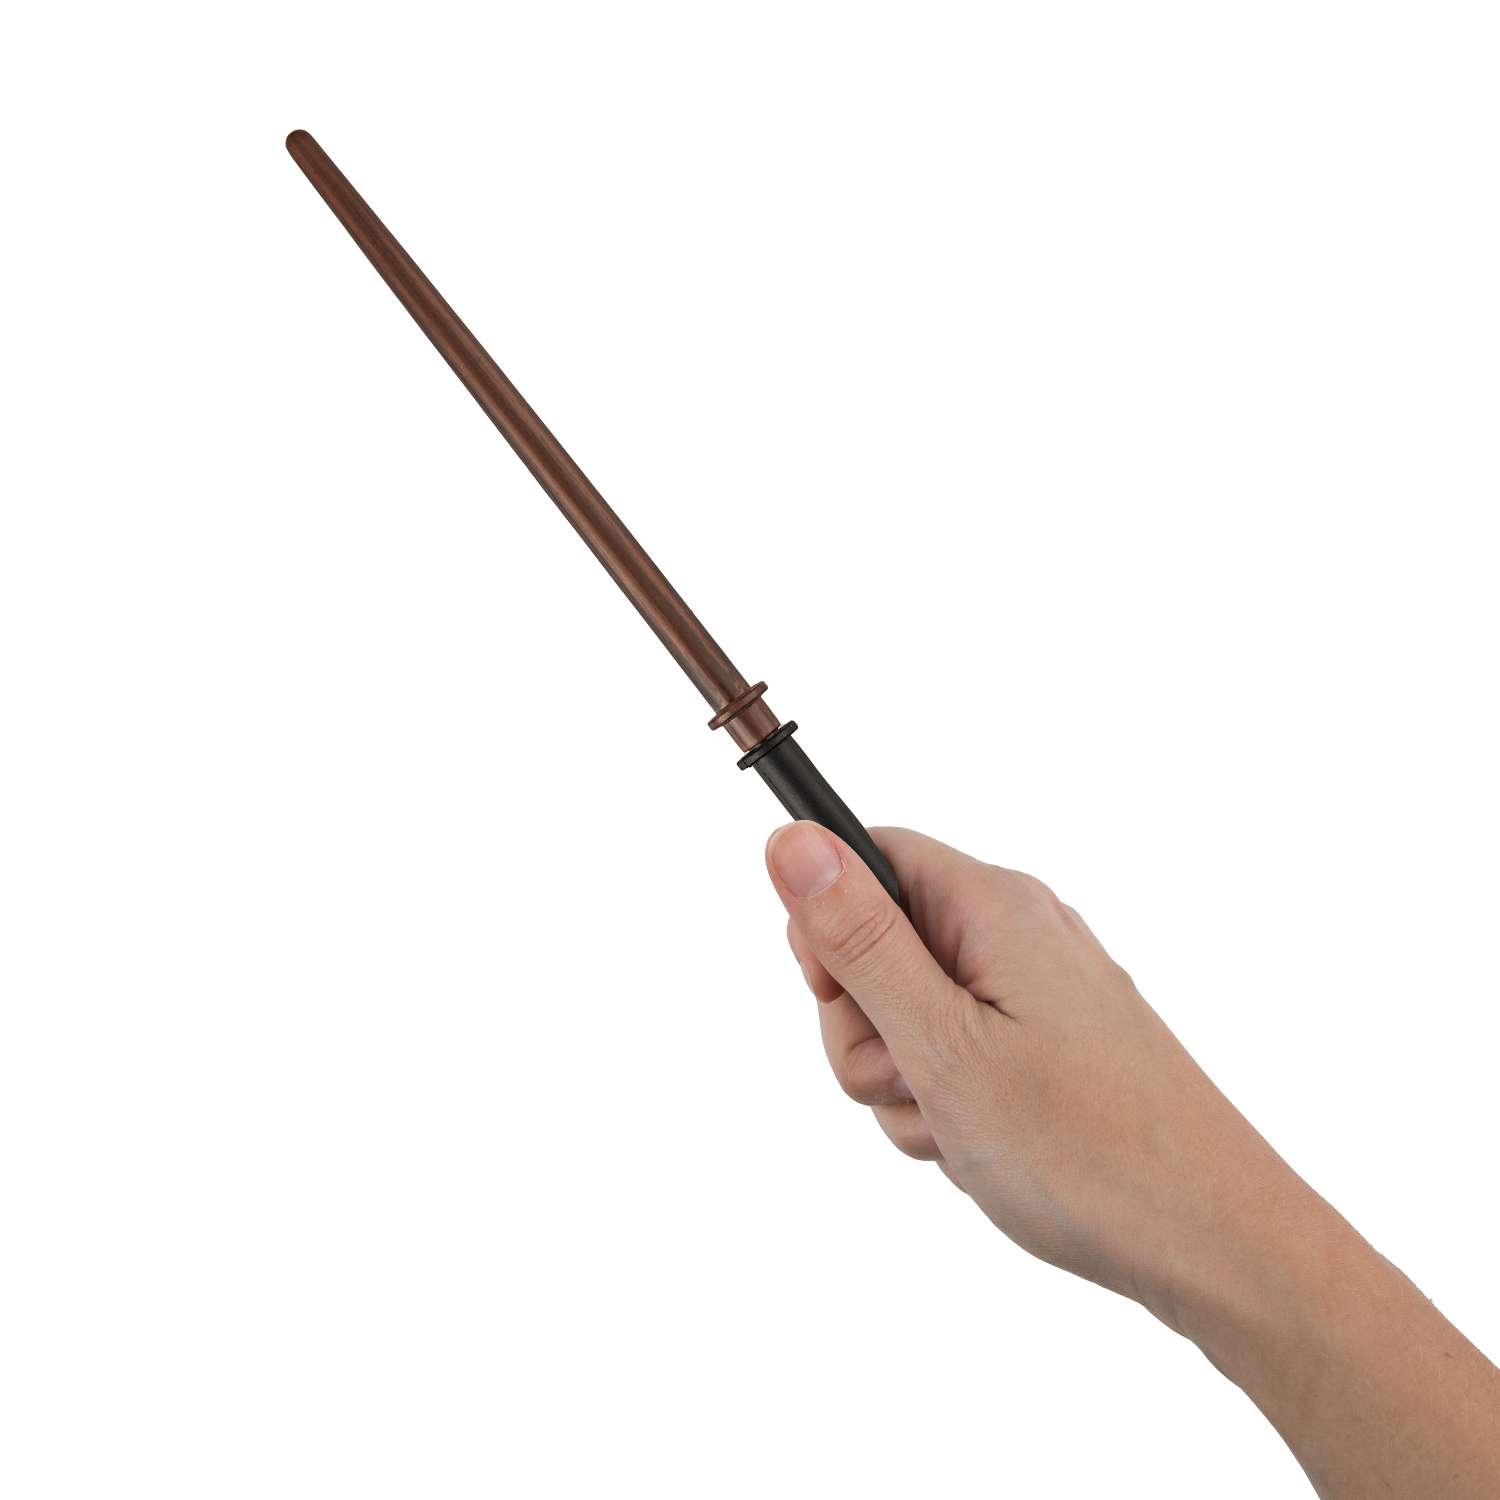 Ручка Harry Potter в виде палочки Драко Малфоя 25 см с подставкой и закладкой - фото 4